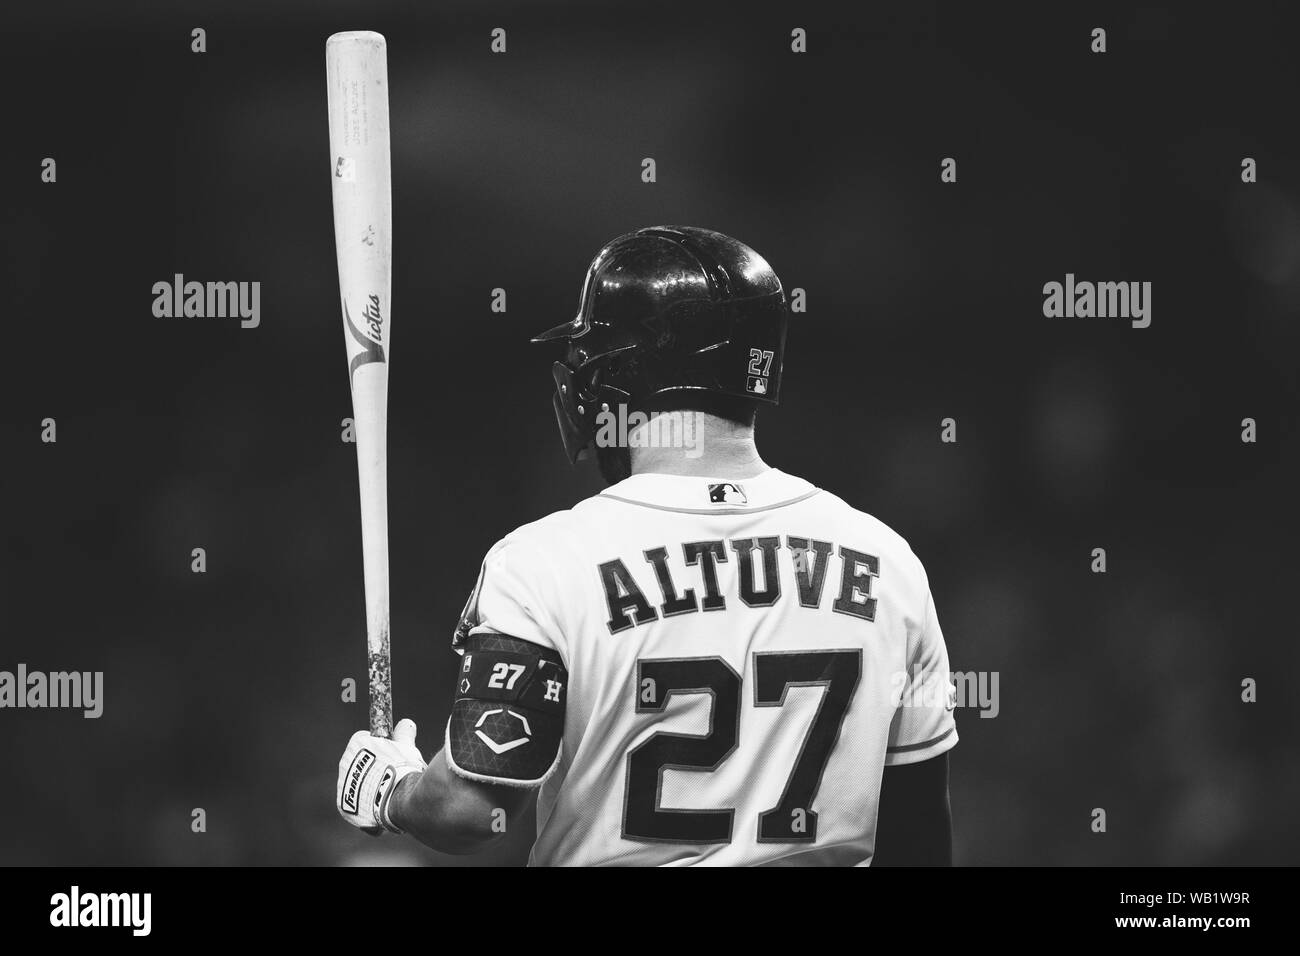 Jose altuve Black and White Stock Photos & Images - Alamy